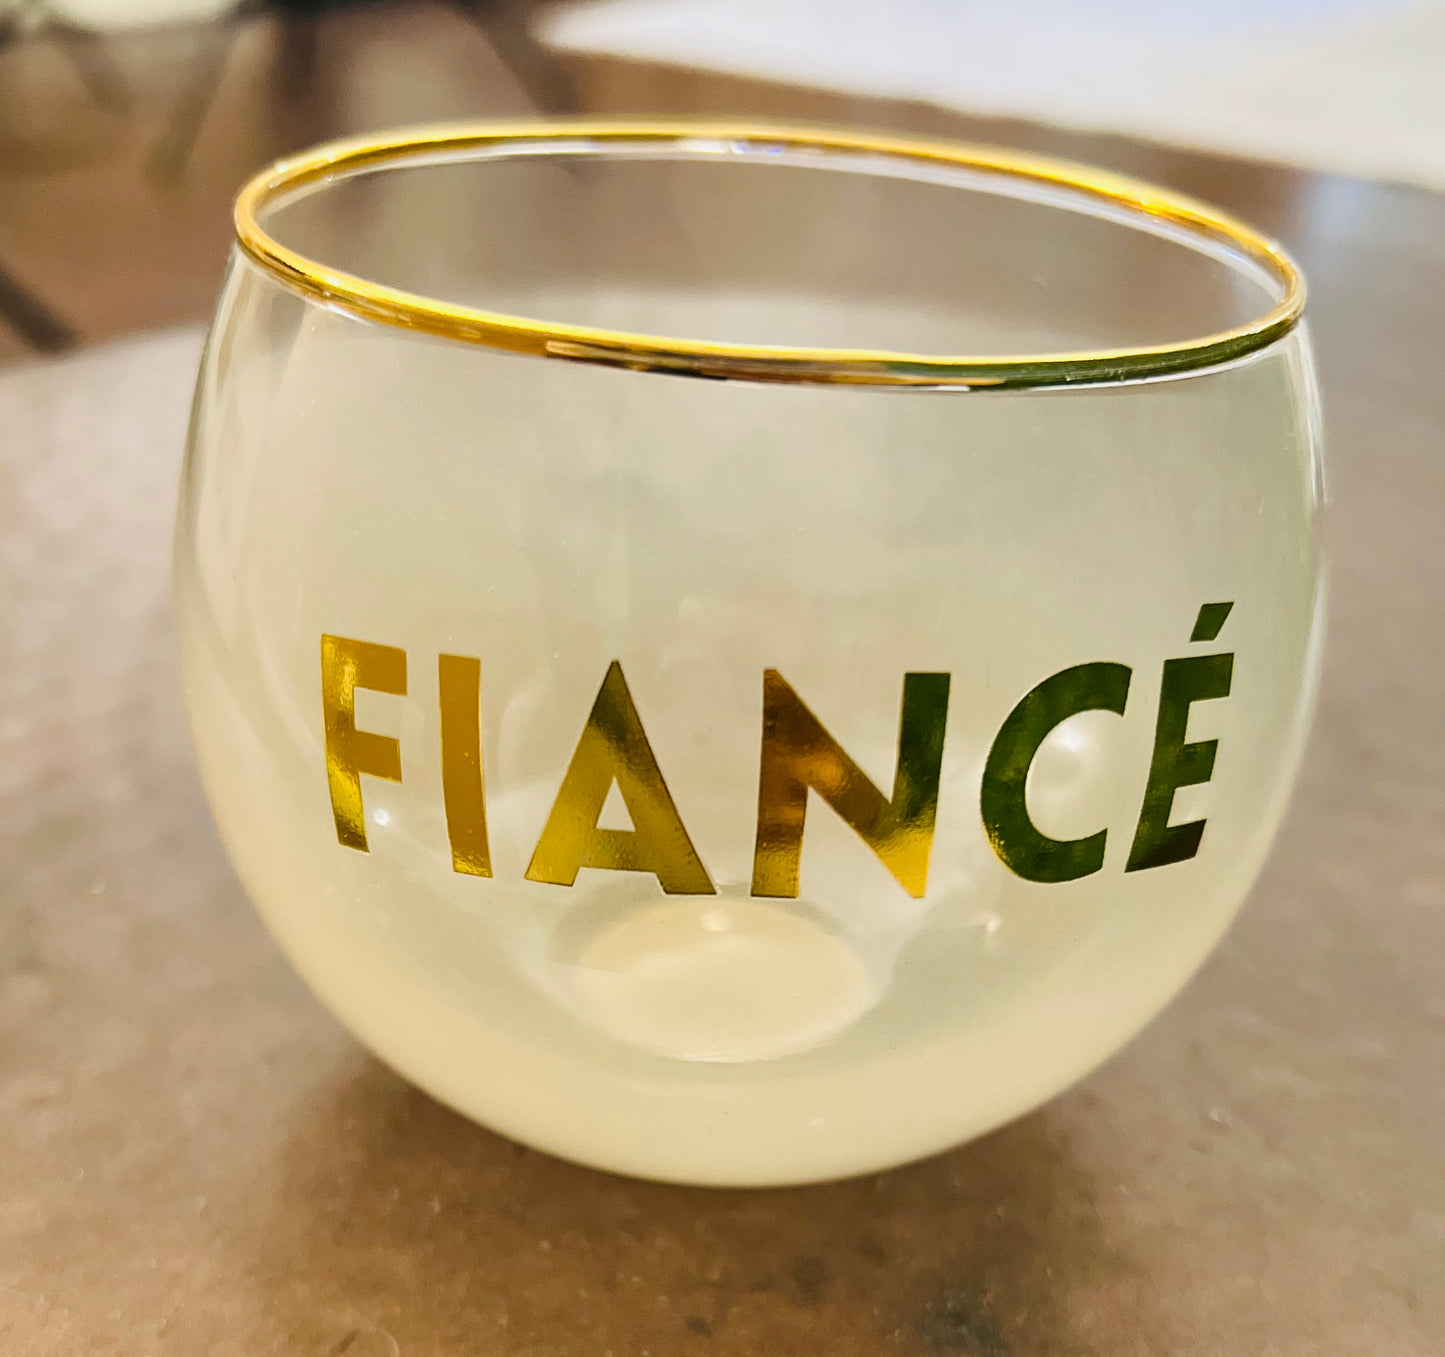 "Fiance" Stemless Wine Glass